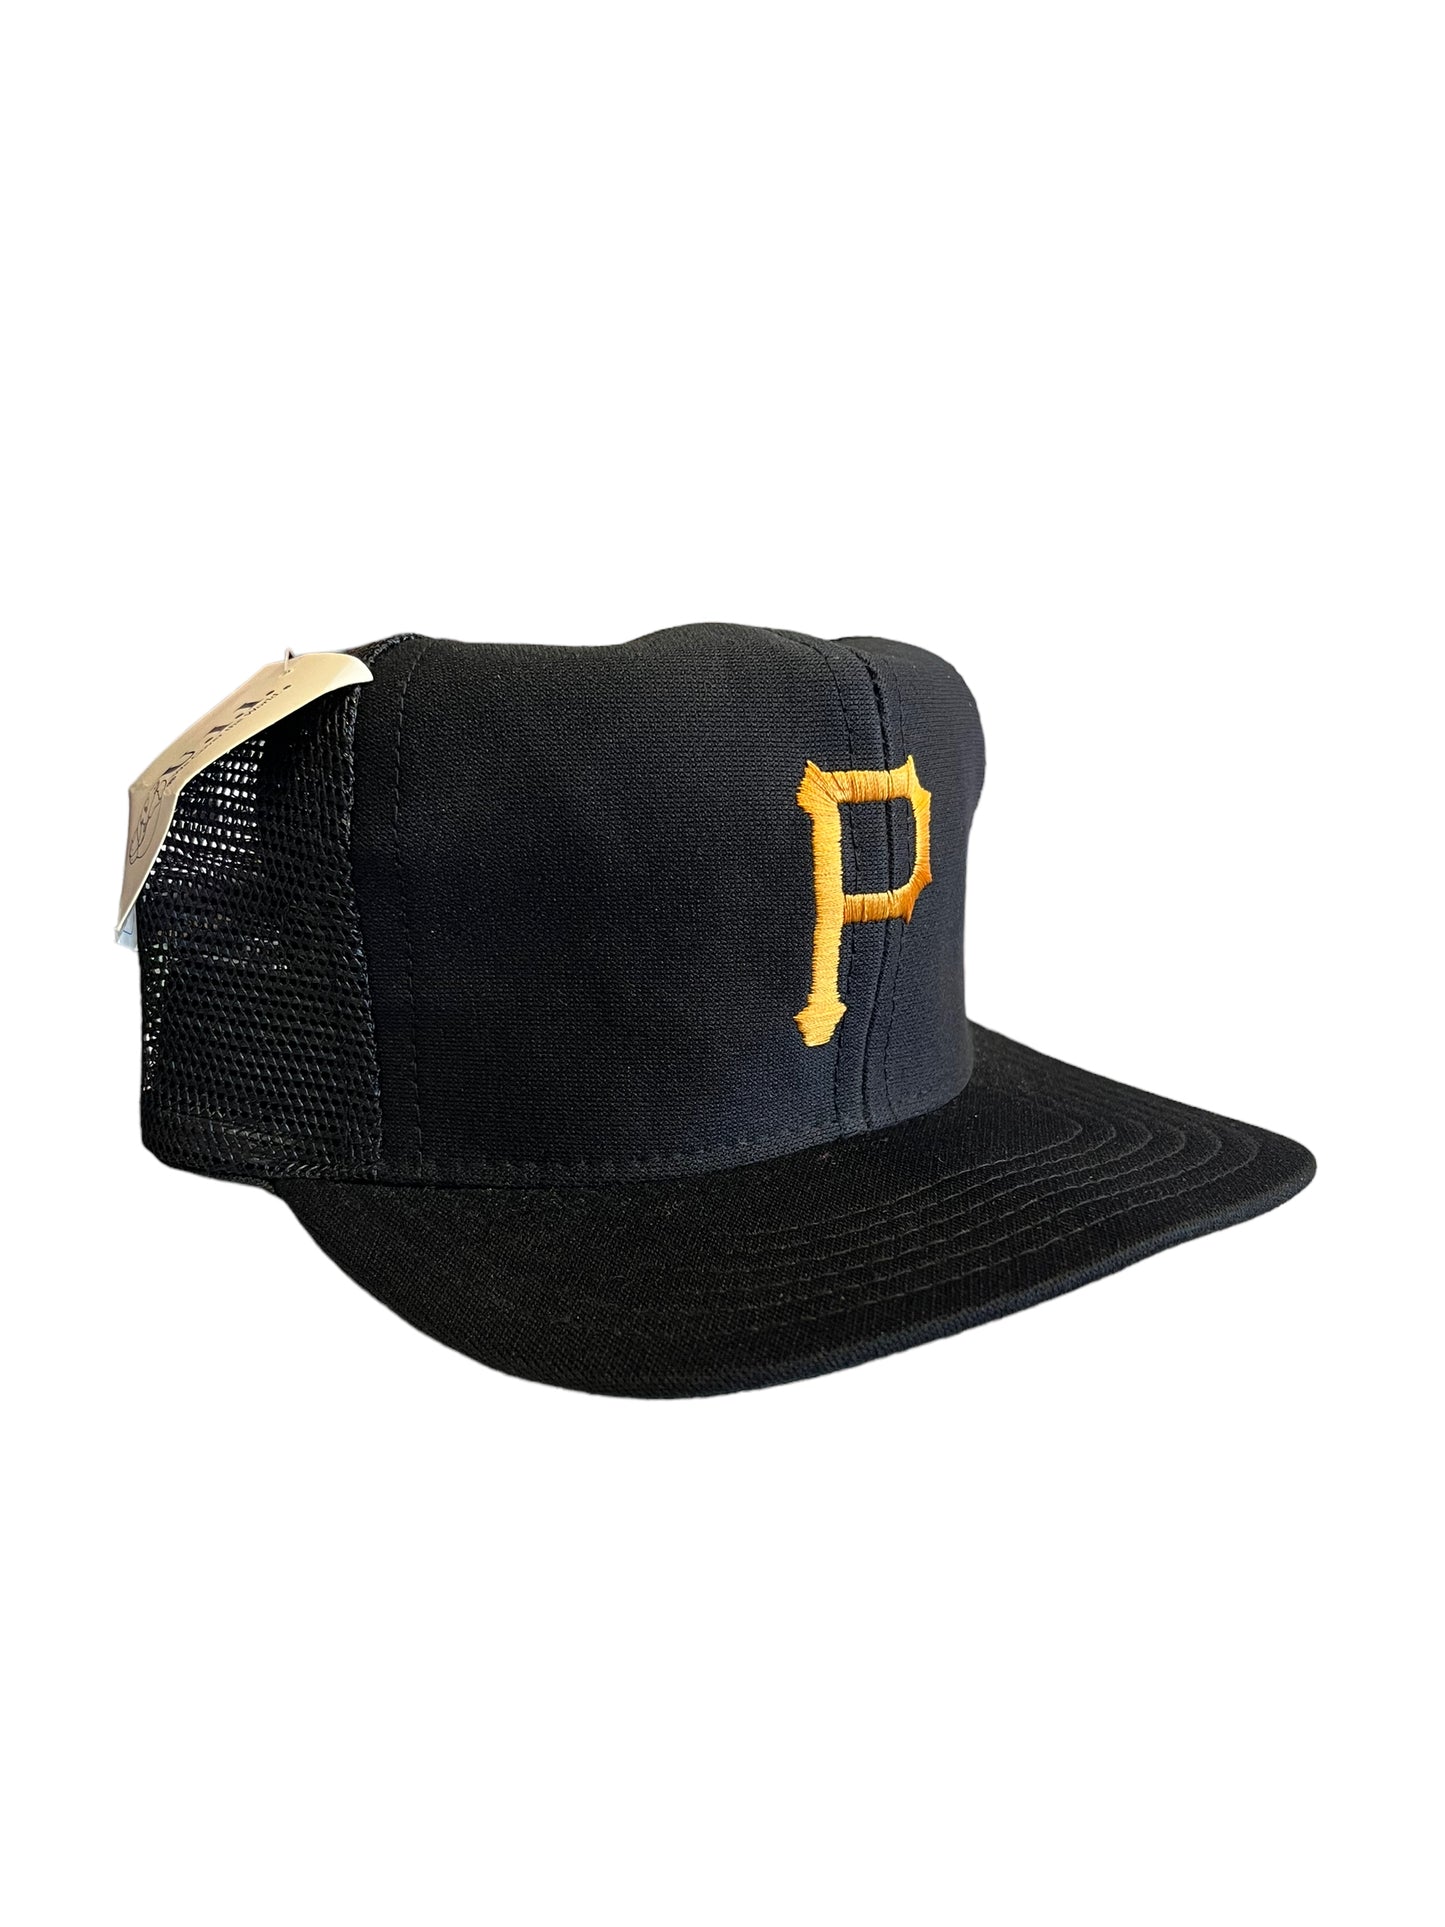 Vintage Pittsburgh Pirates Trucker Hat Brand New